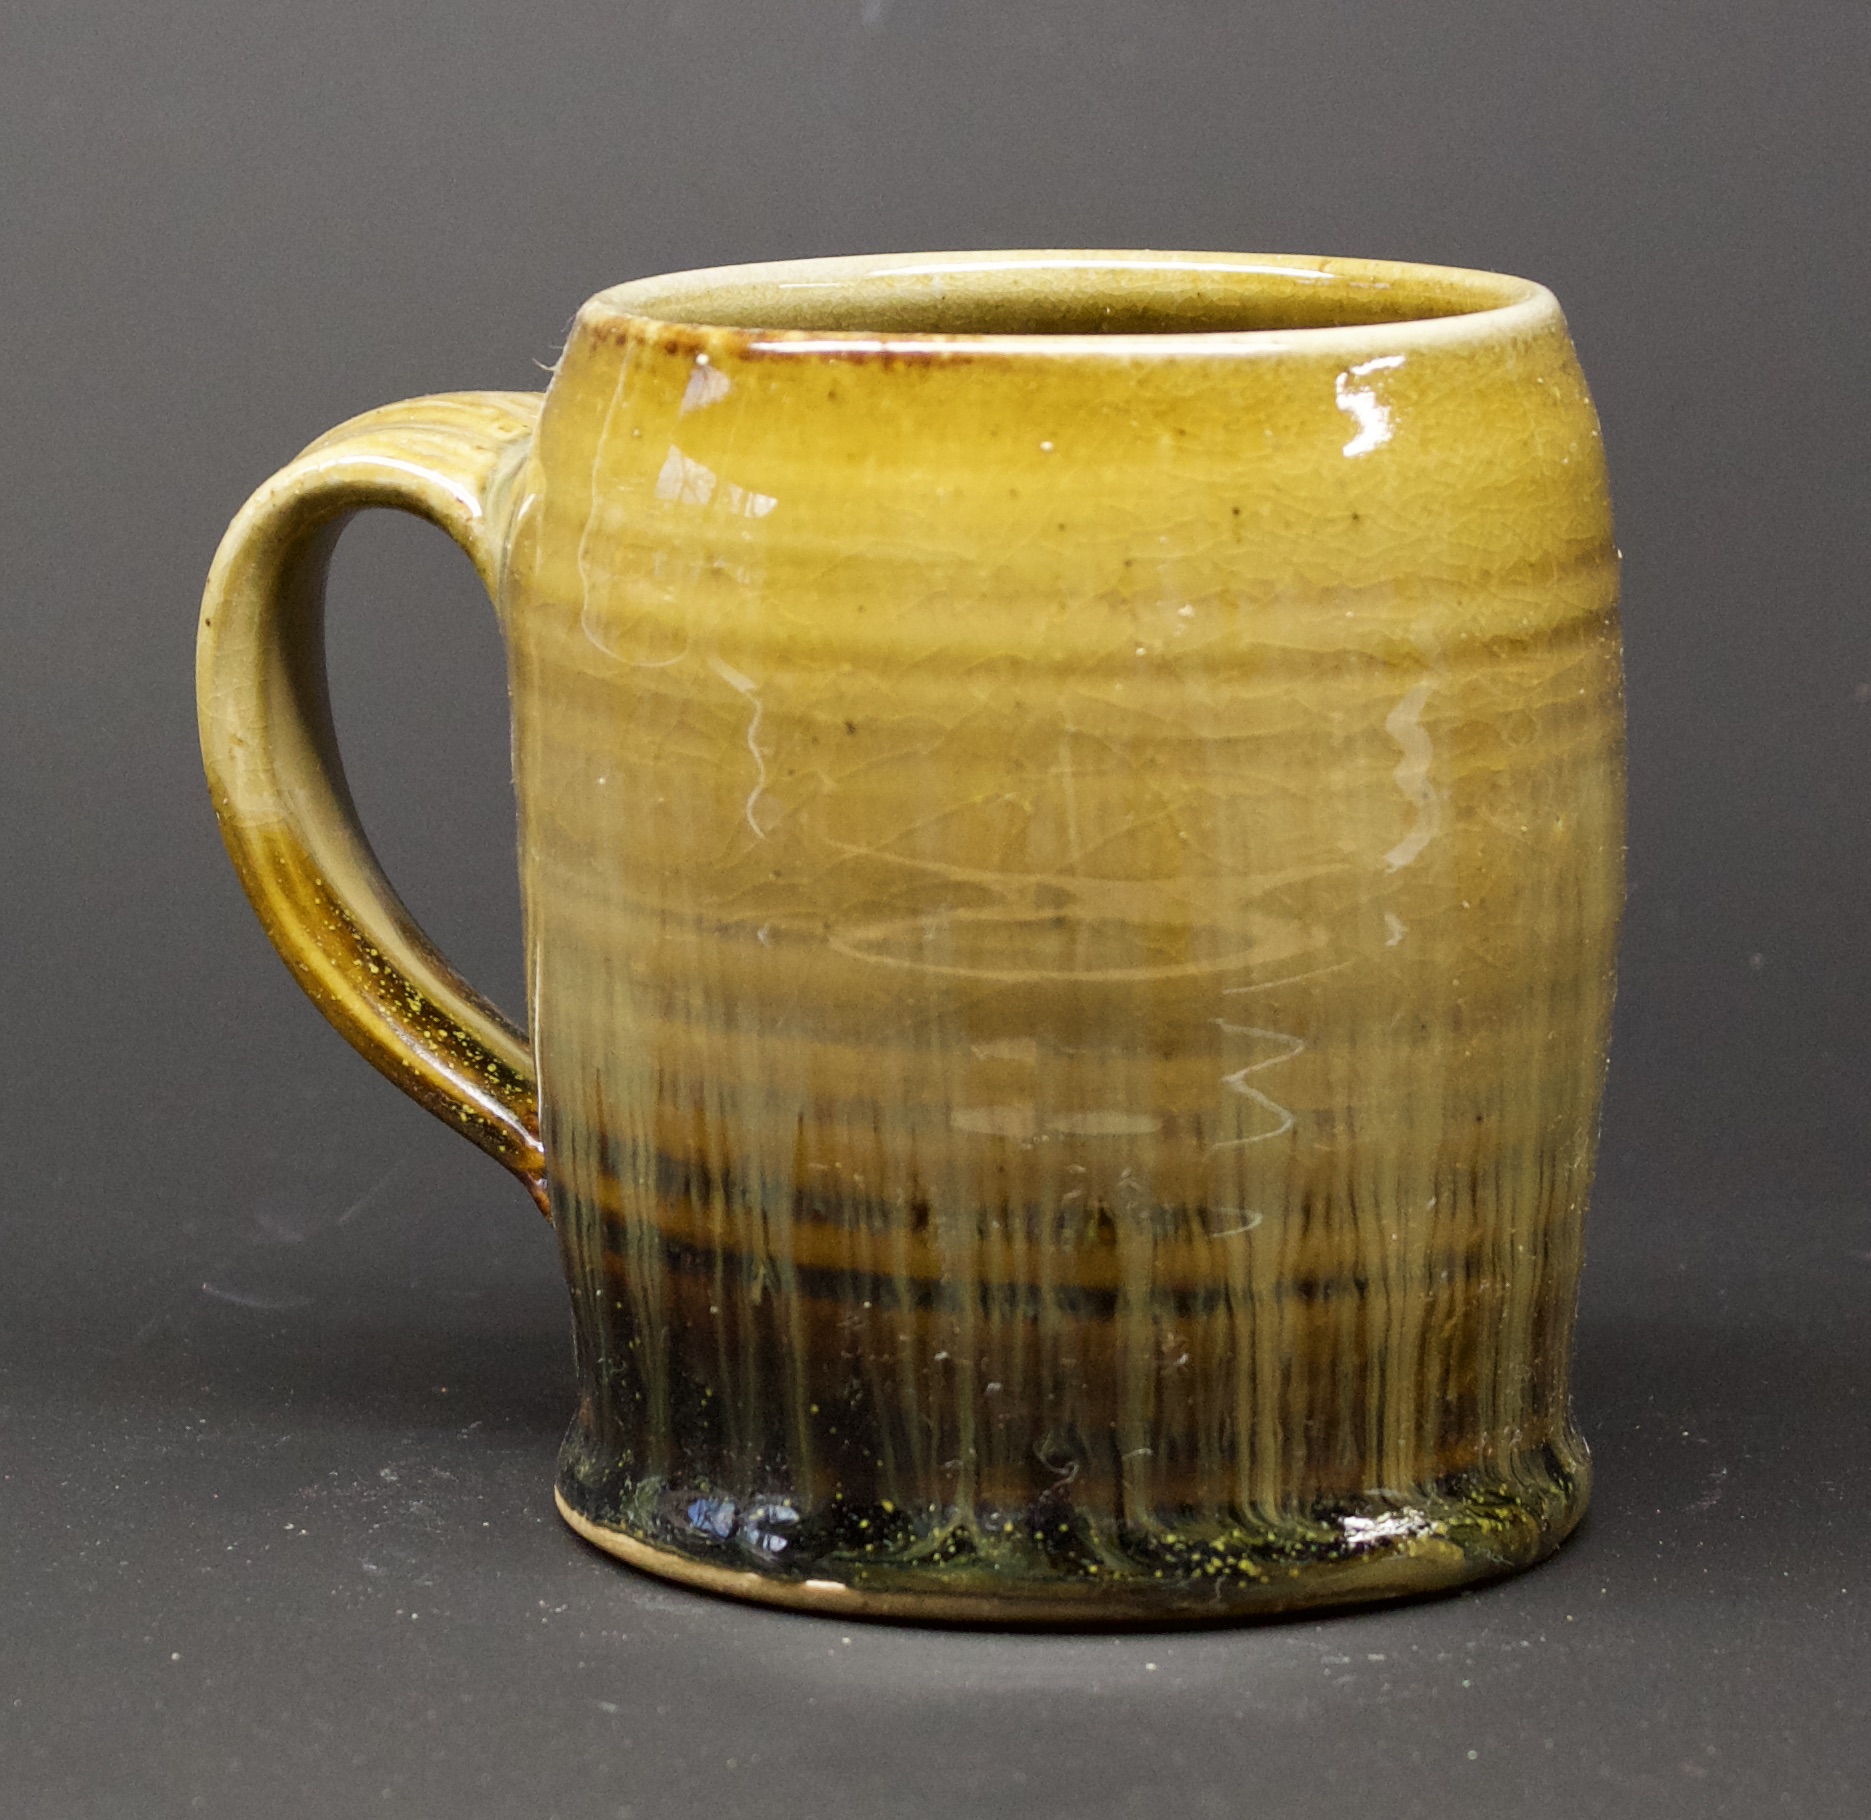 34. Mug, Tenmoku & ash glaze
4" x 4"
$50